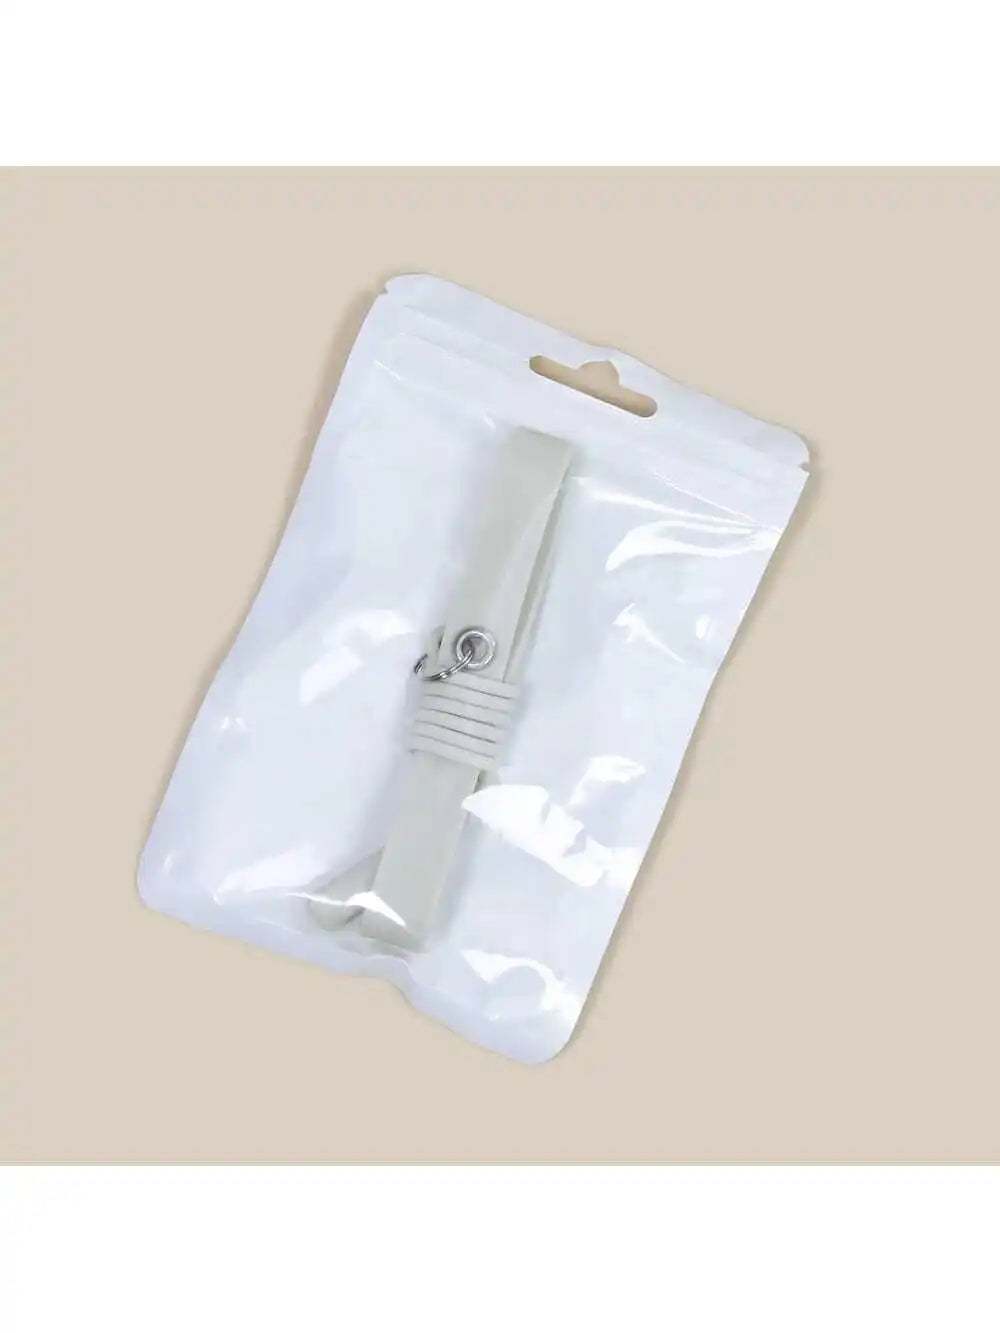 1PC Silicone Eyelash Extension Tweezer Wrist Strap Lash Tweezer Bracelet Protector Prevent Tweezers Drops Auxiliary Tools